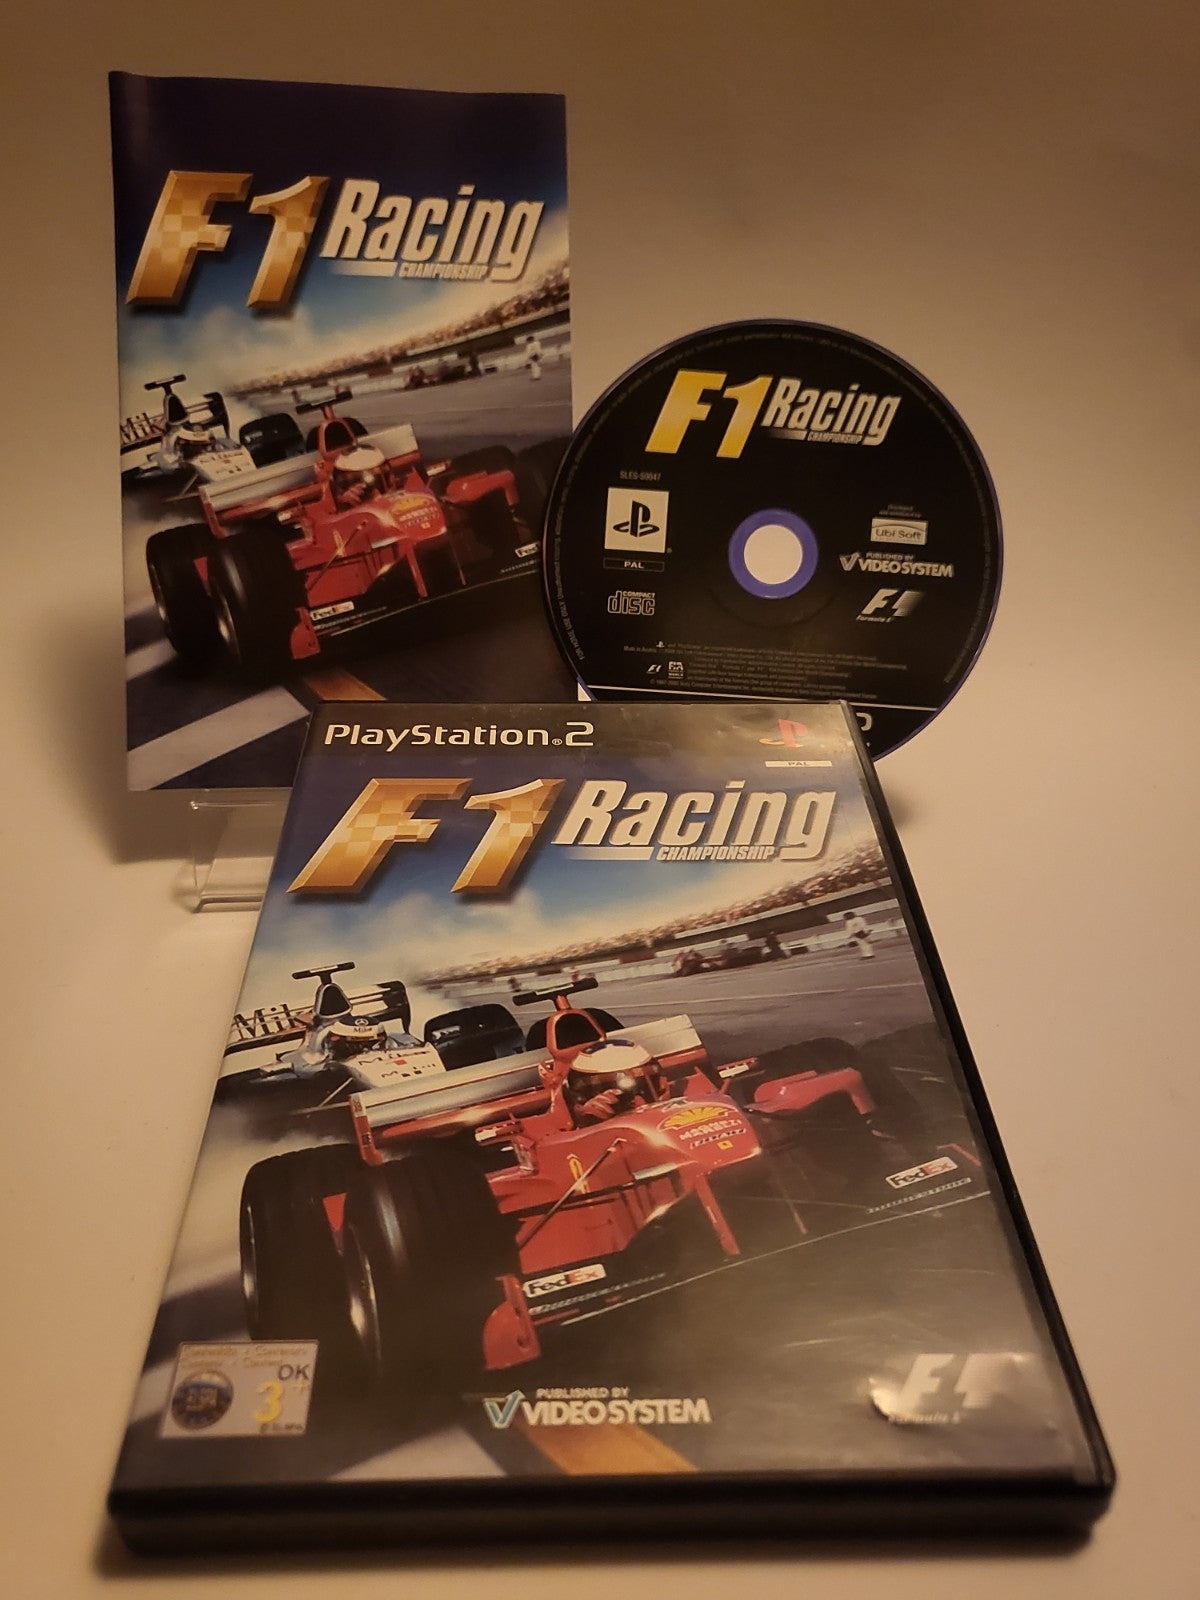 F1 Racing Championship Playstation 2